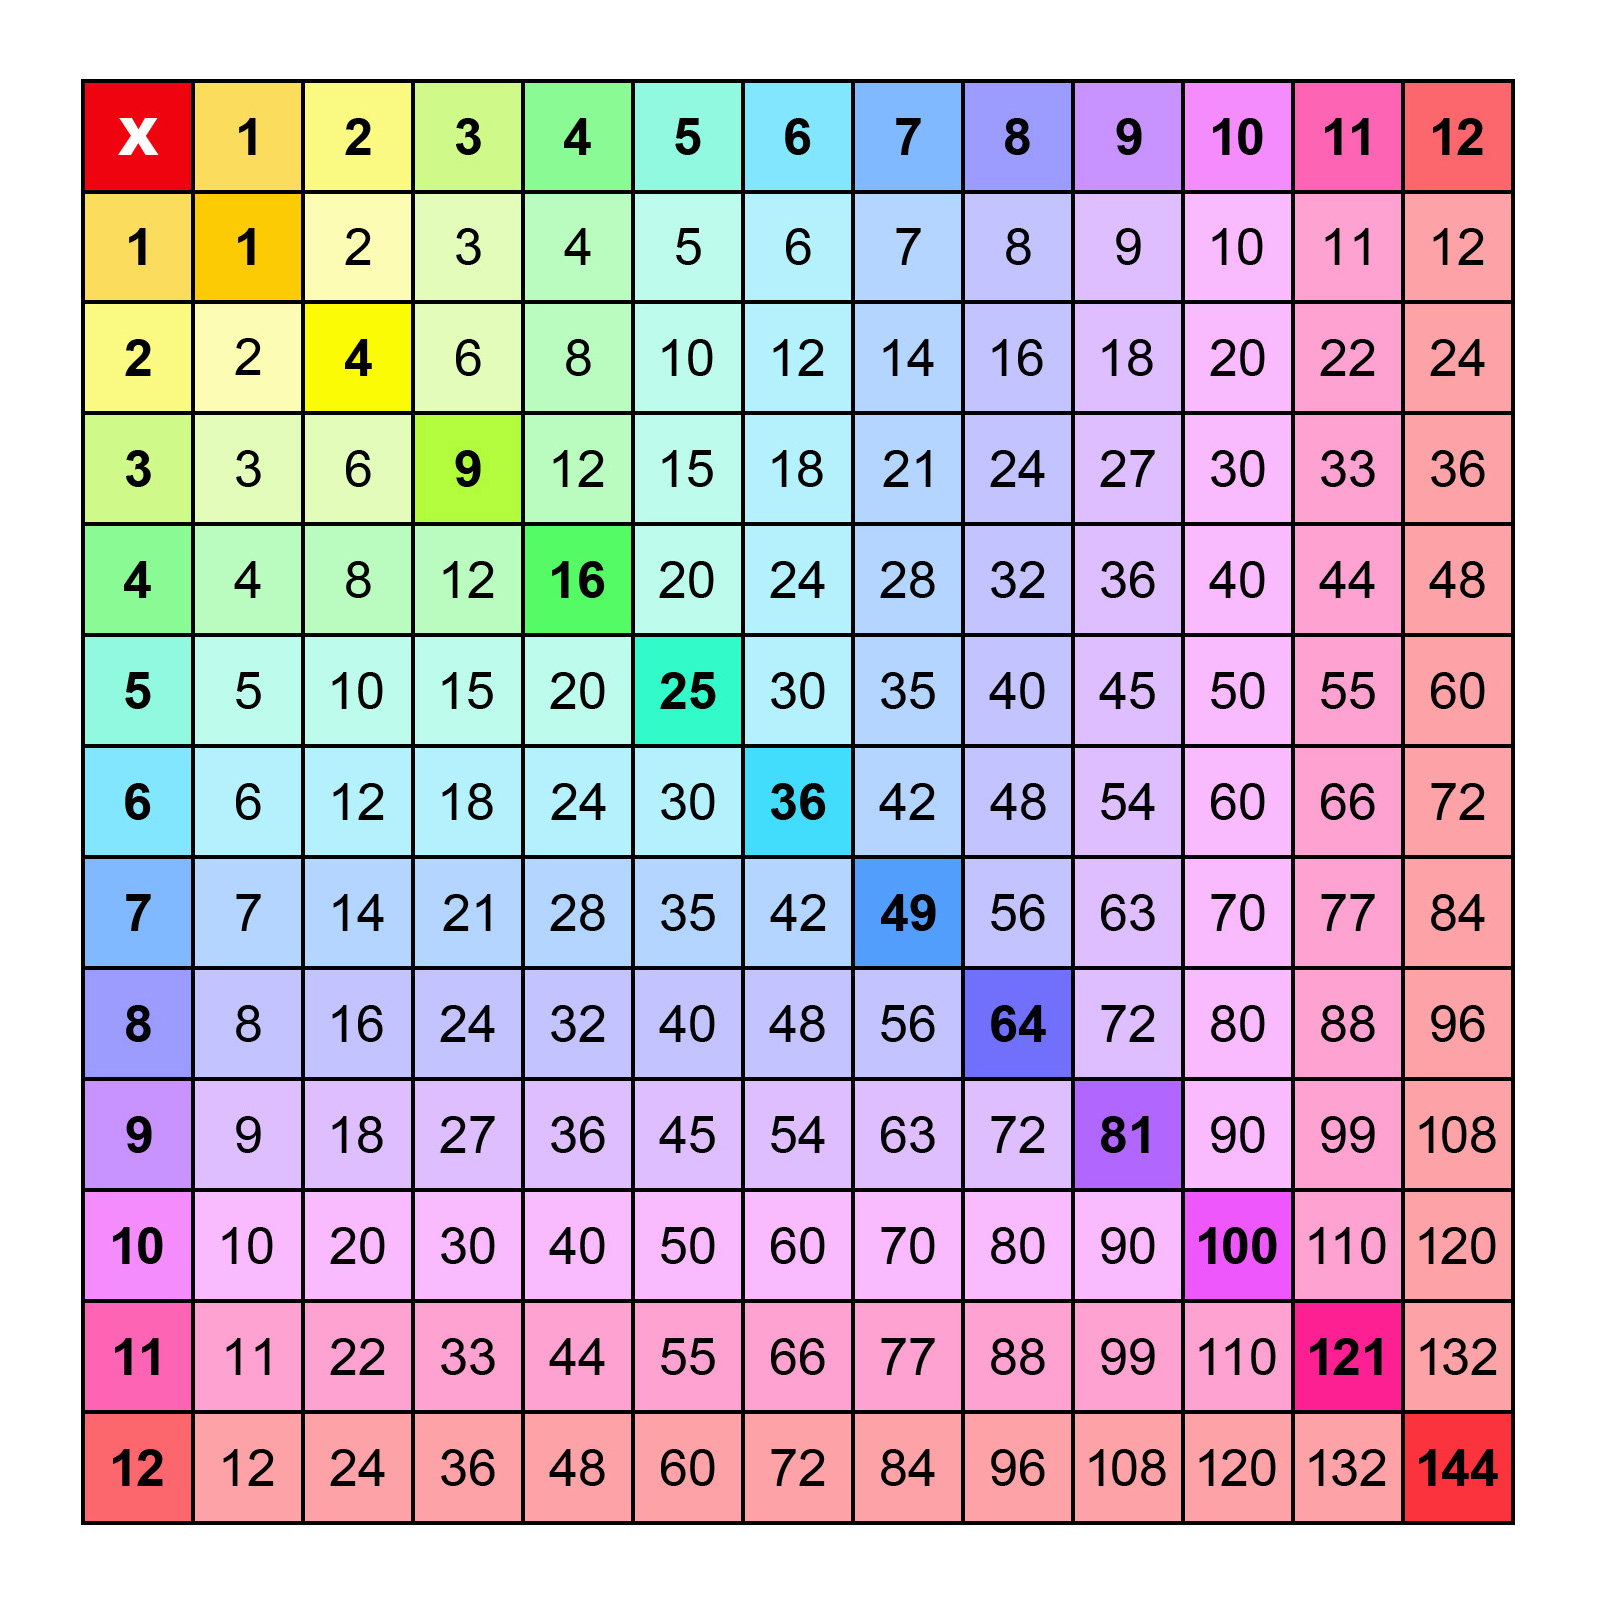 times-table-chart-1-12-pdf-elcho-table